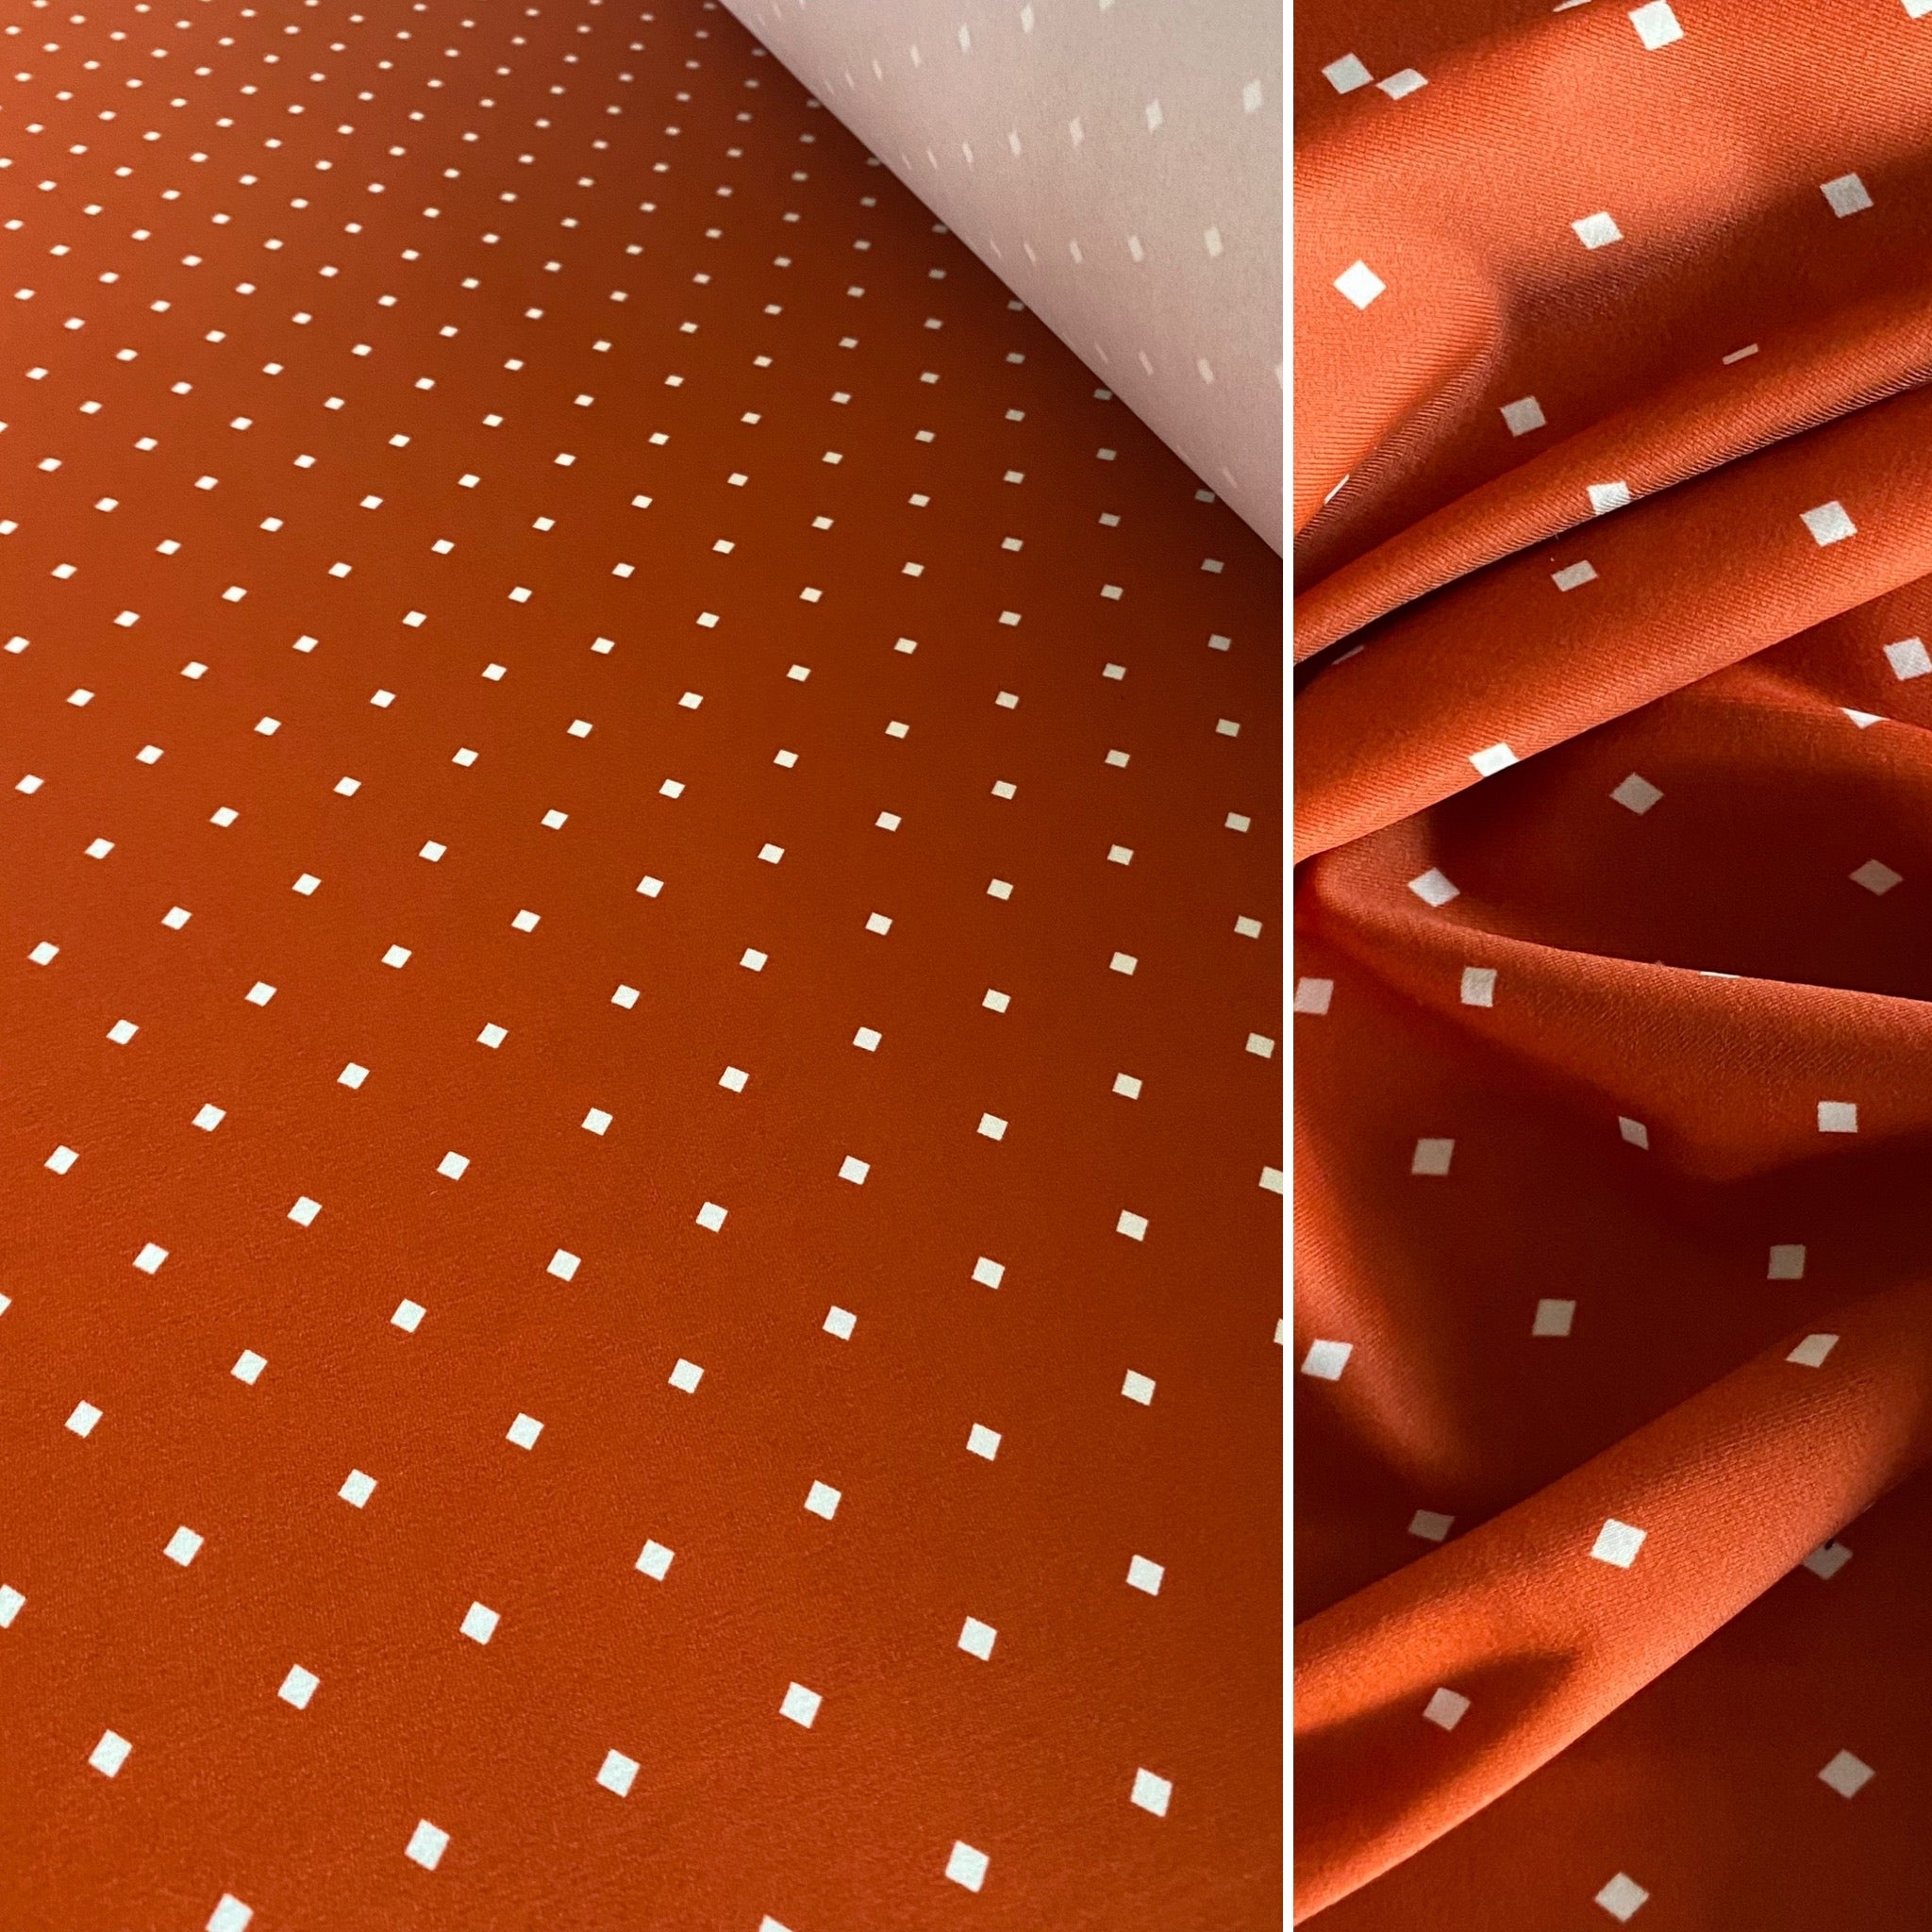 Terracotta Red Brown w/ White Polka Dot Square Spot Lycra Fabric - 1m